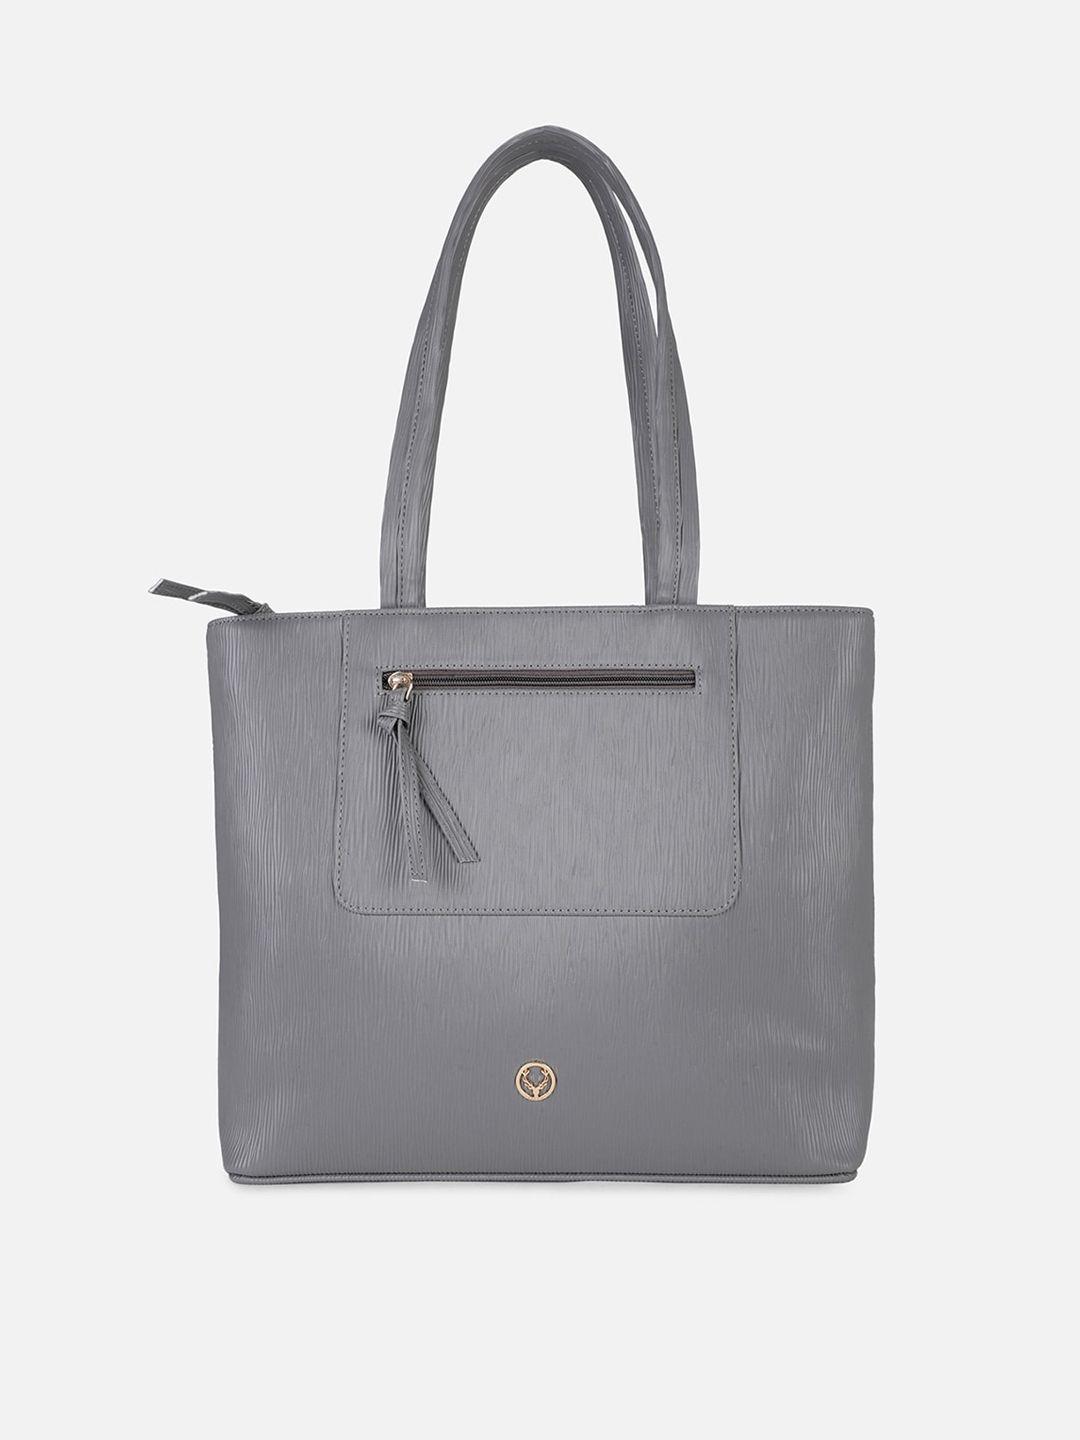 allen solly grey pu structured shoulder bag with tasselled